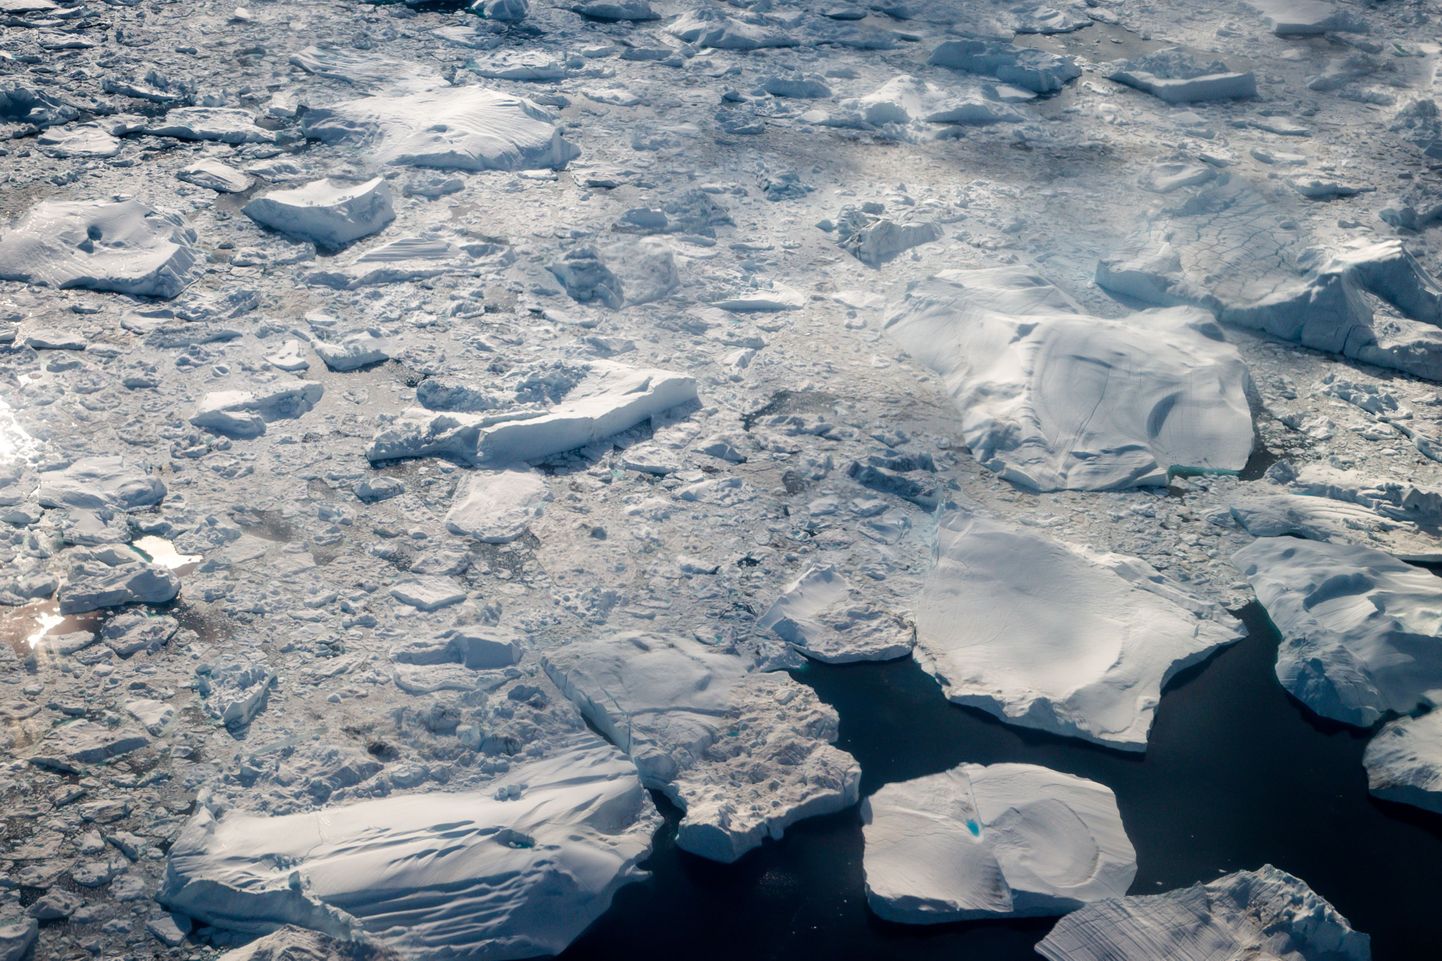 От Антарктиды откололся айсберг весом 315 млрд тонн.